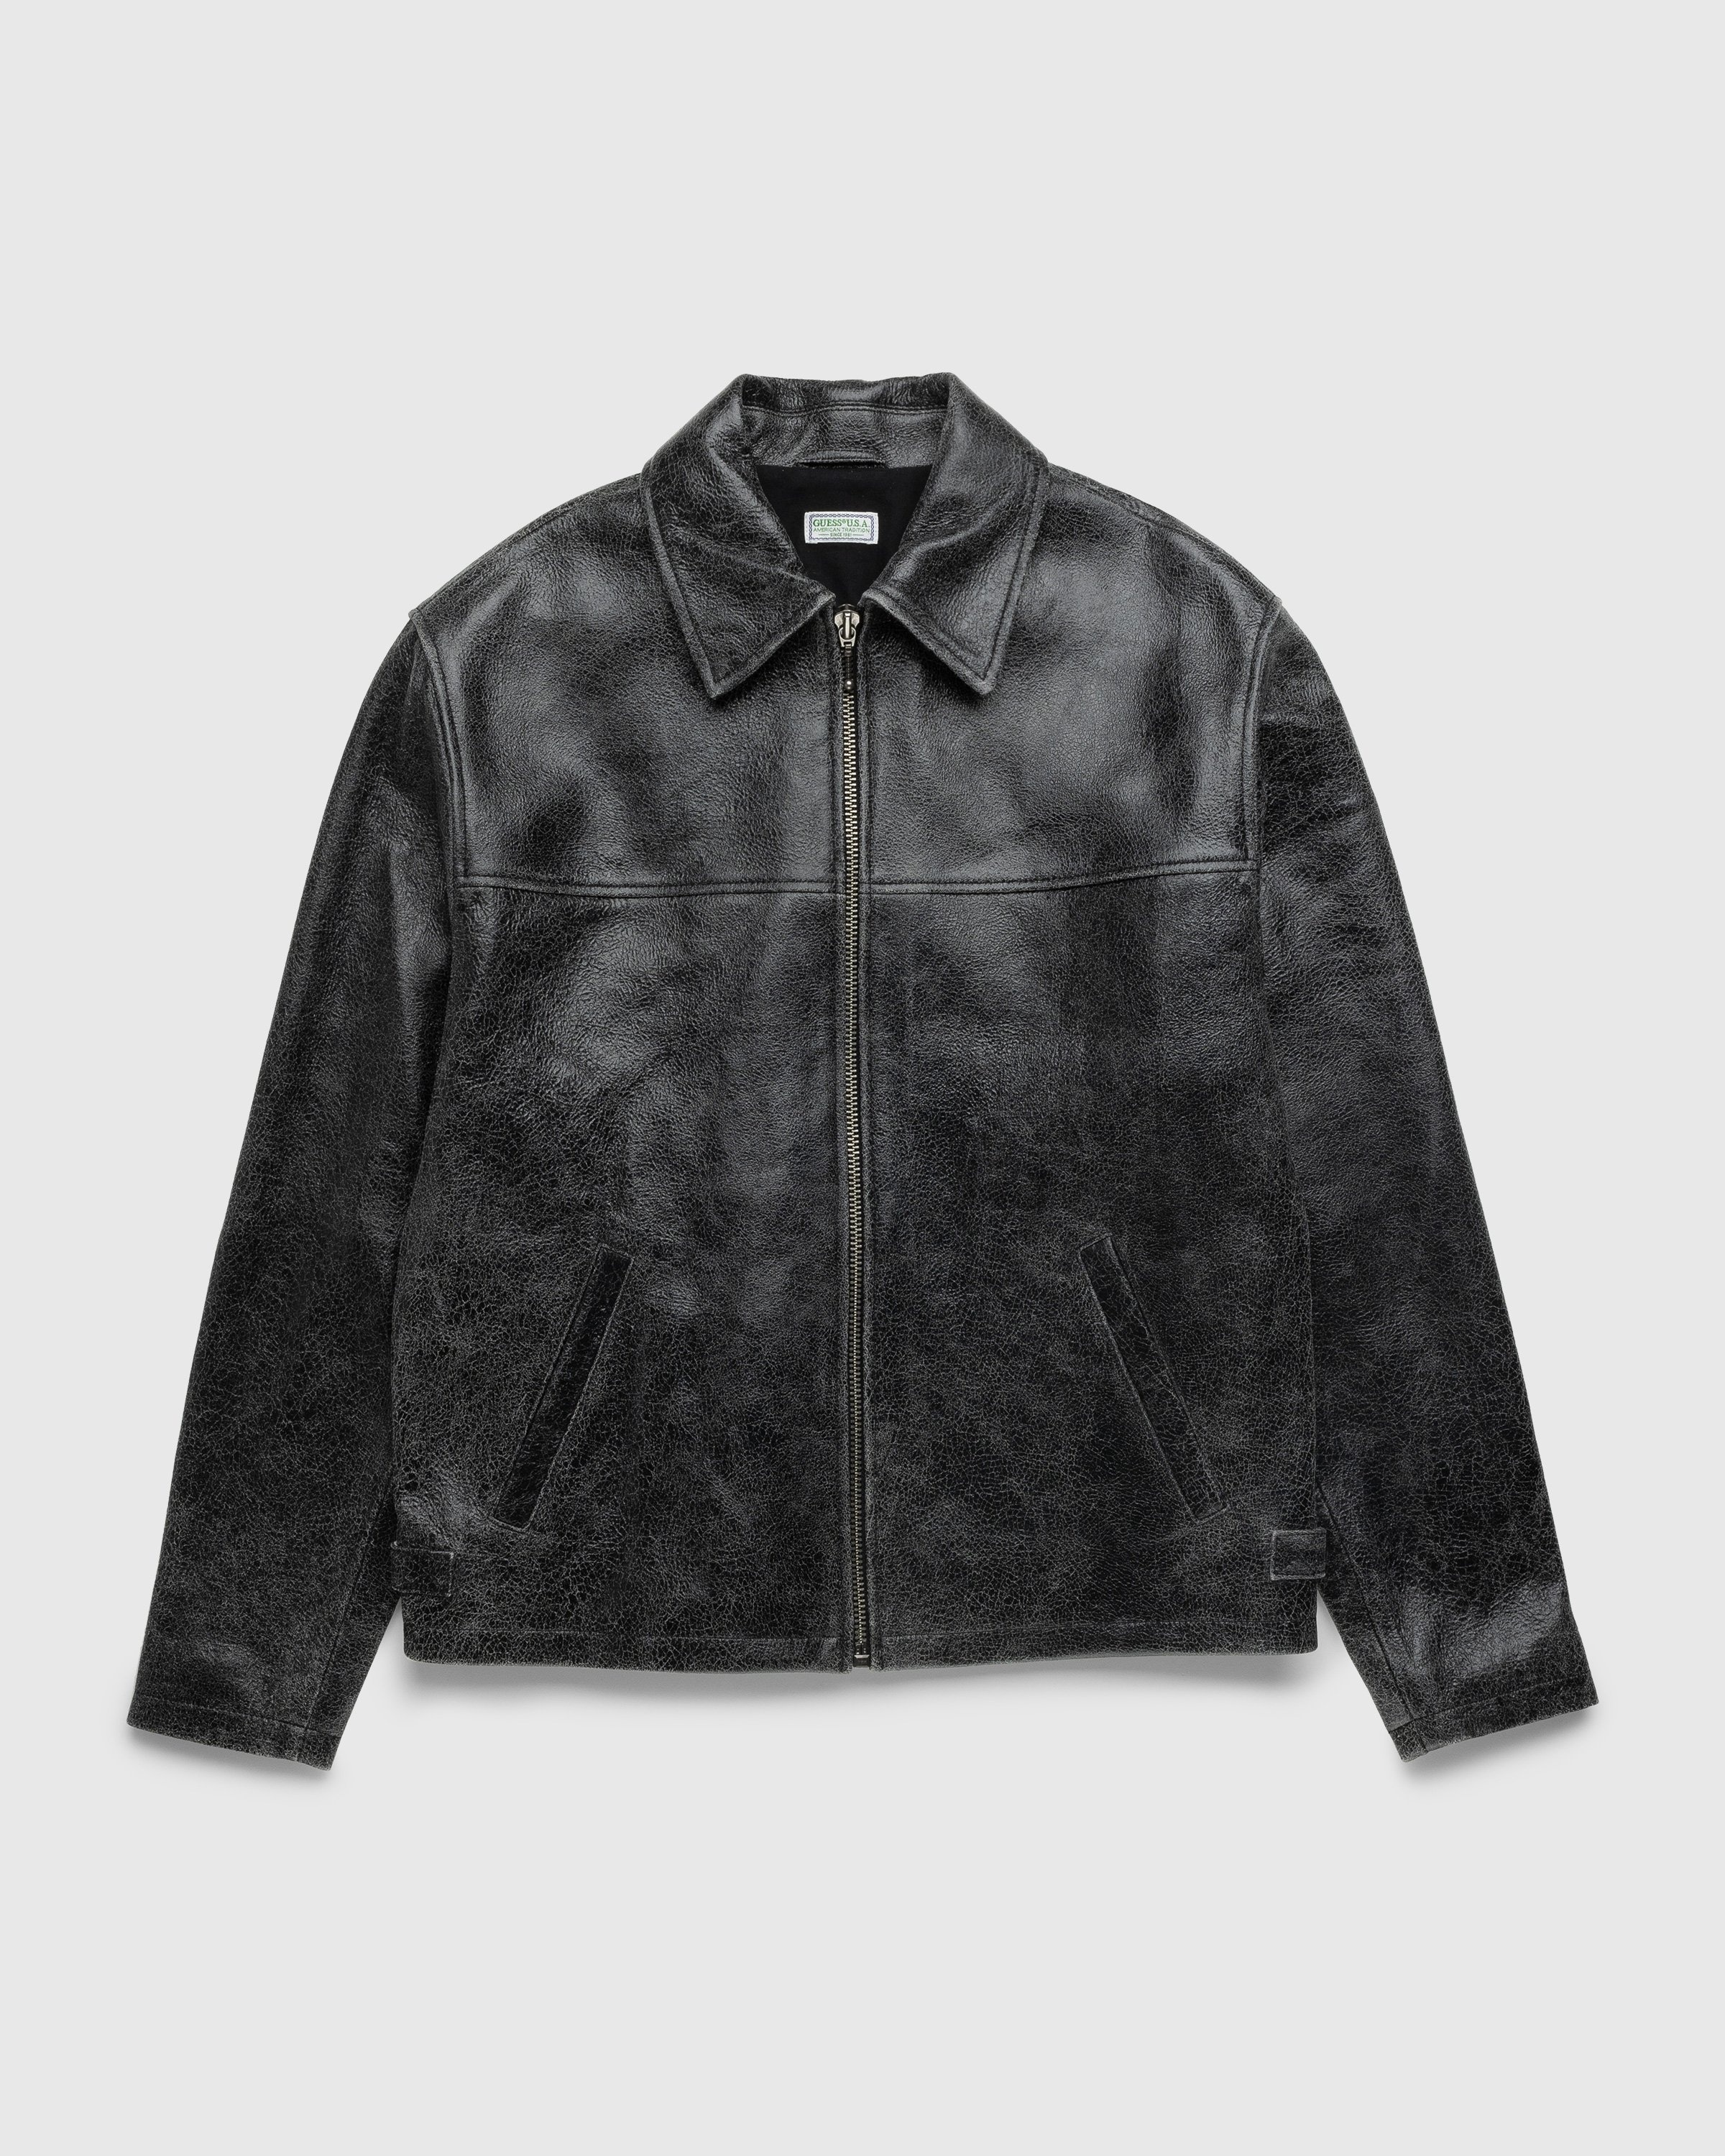 Guess USA – Crackle Leather Jacket Black | Highsnobiety Shop